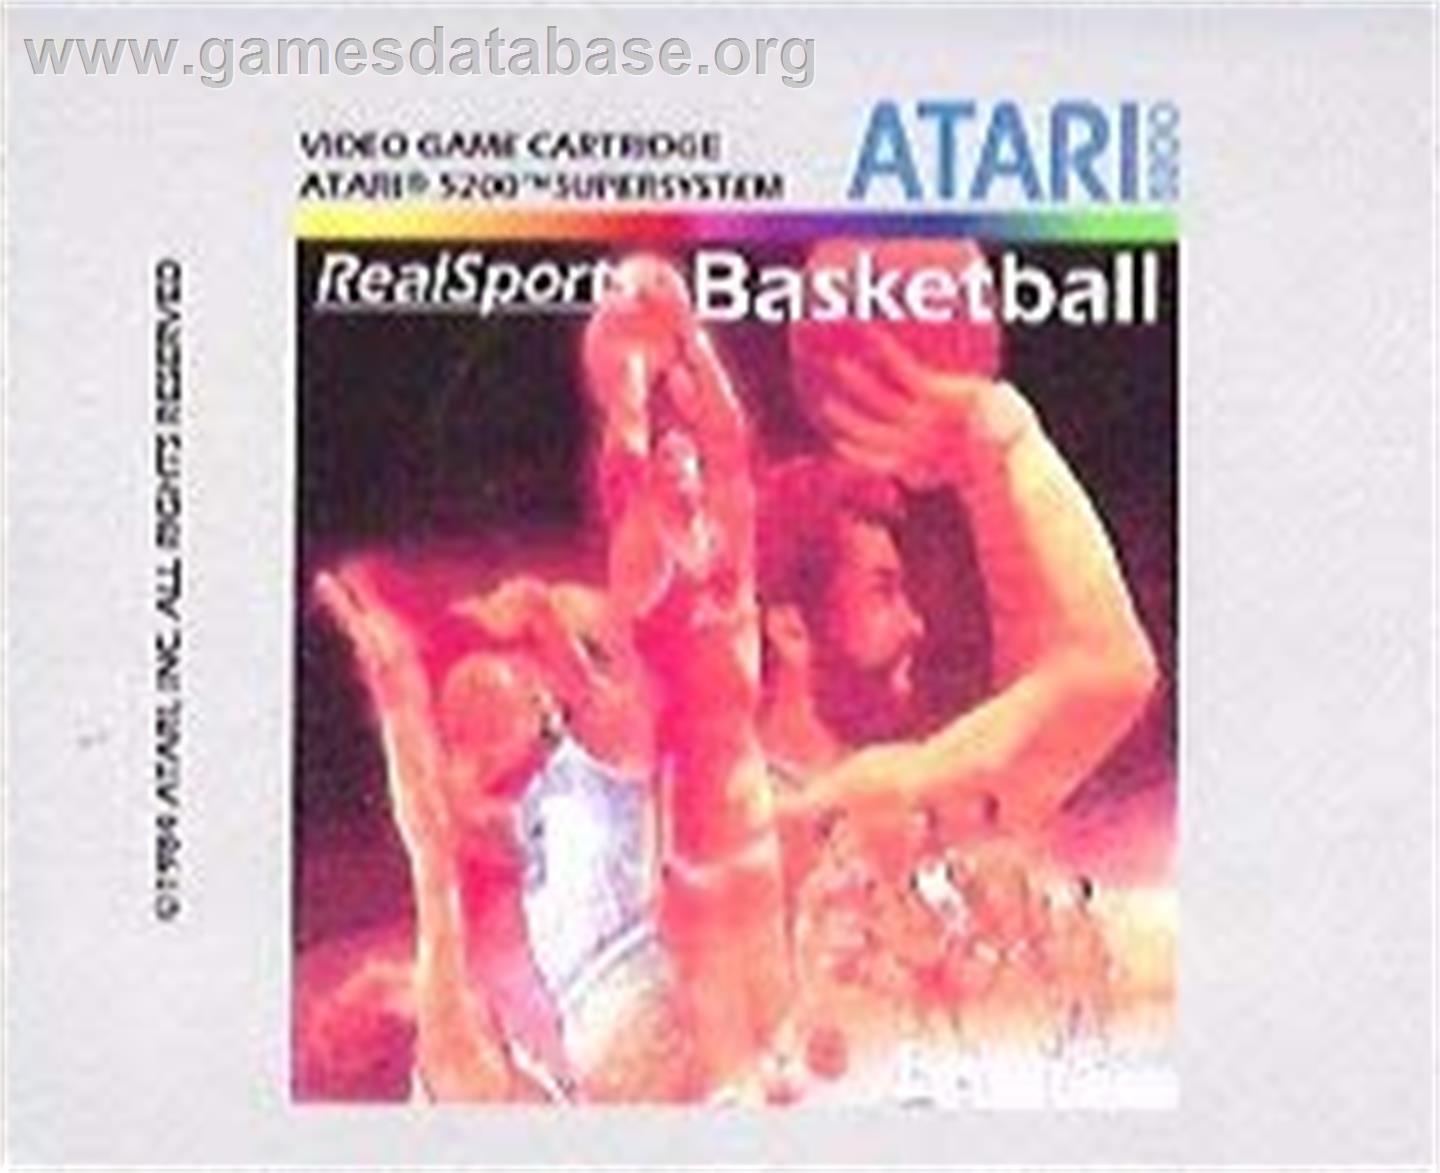 RealSports Basketball - Atari 5200 - Artwork - Cartridge Top